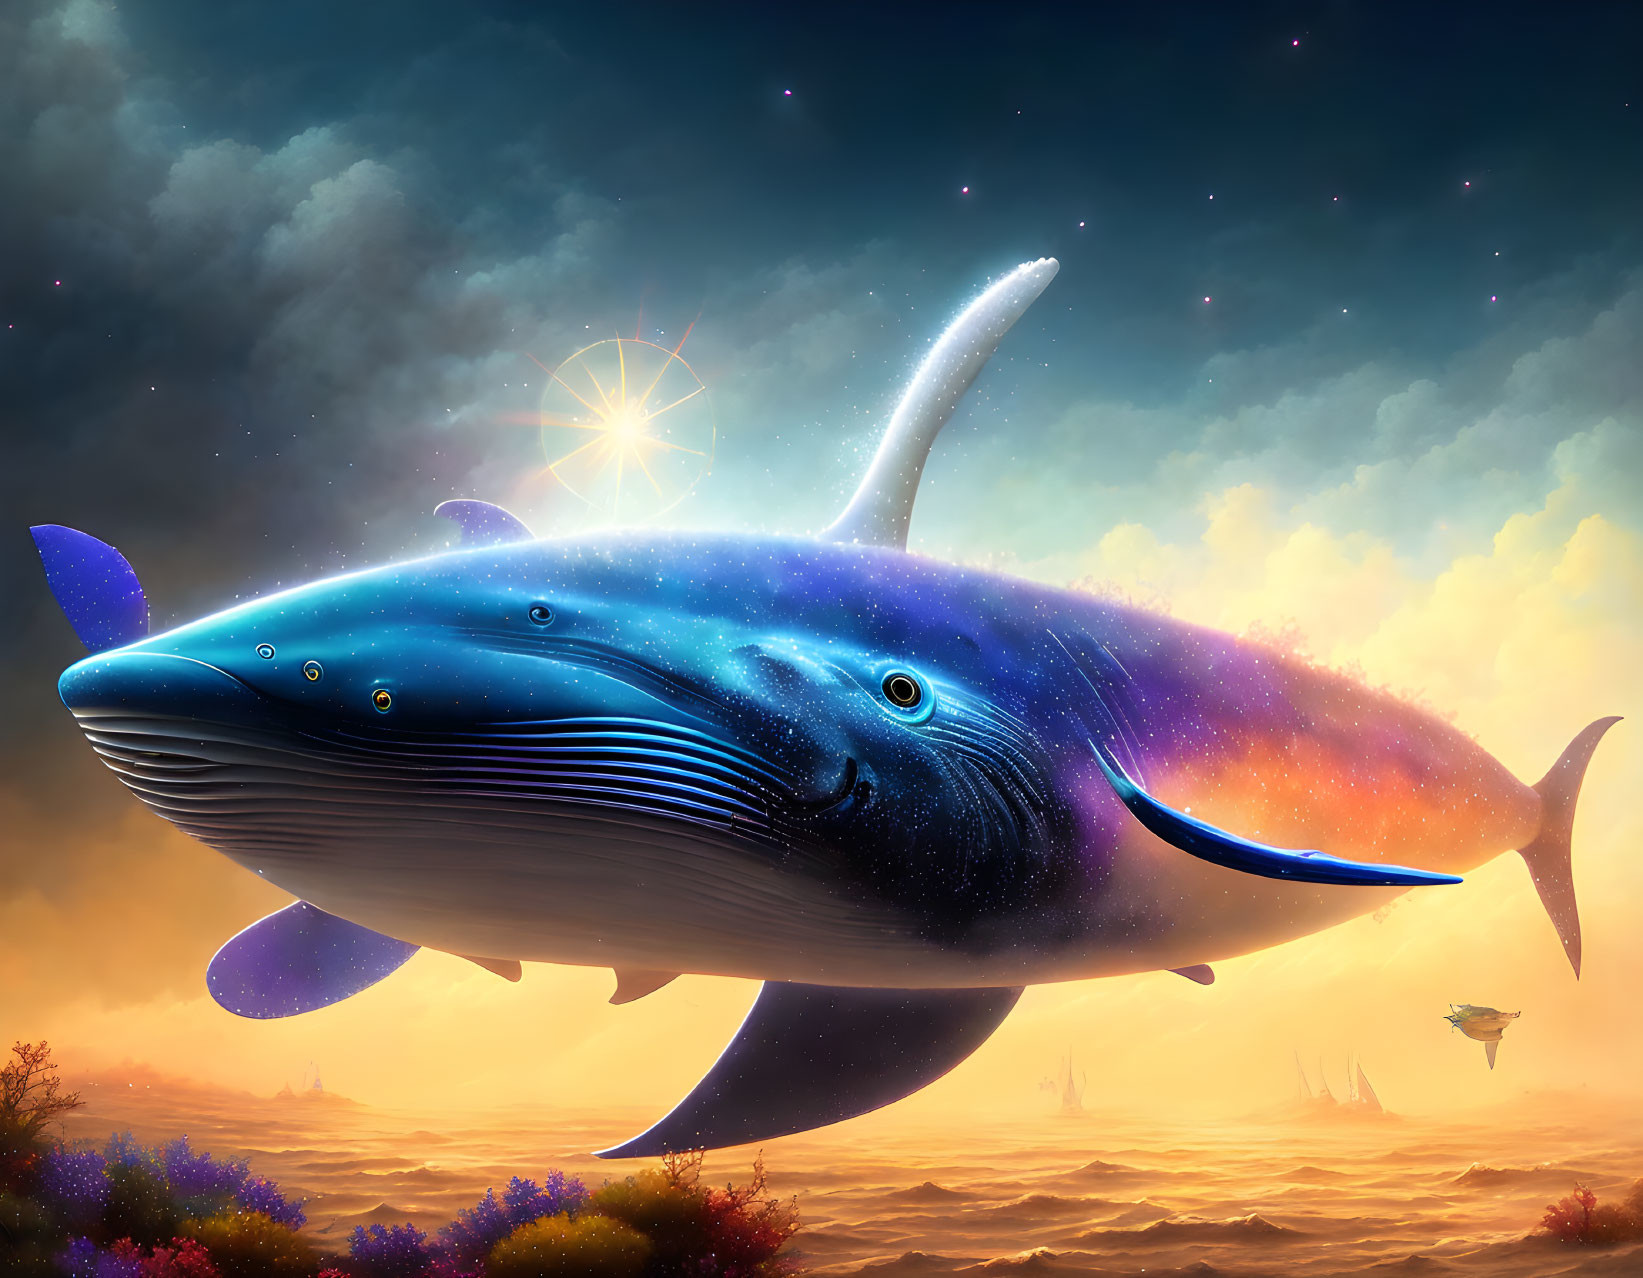 Whale colorful spirit in night desert sky 